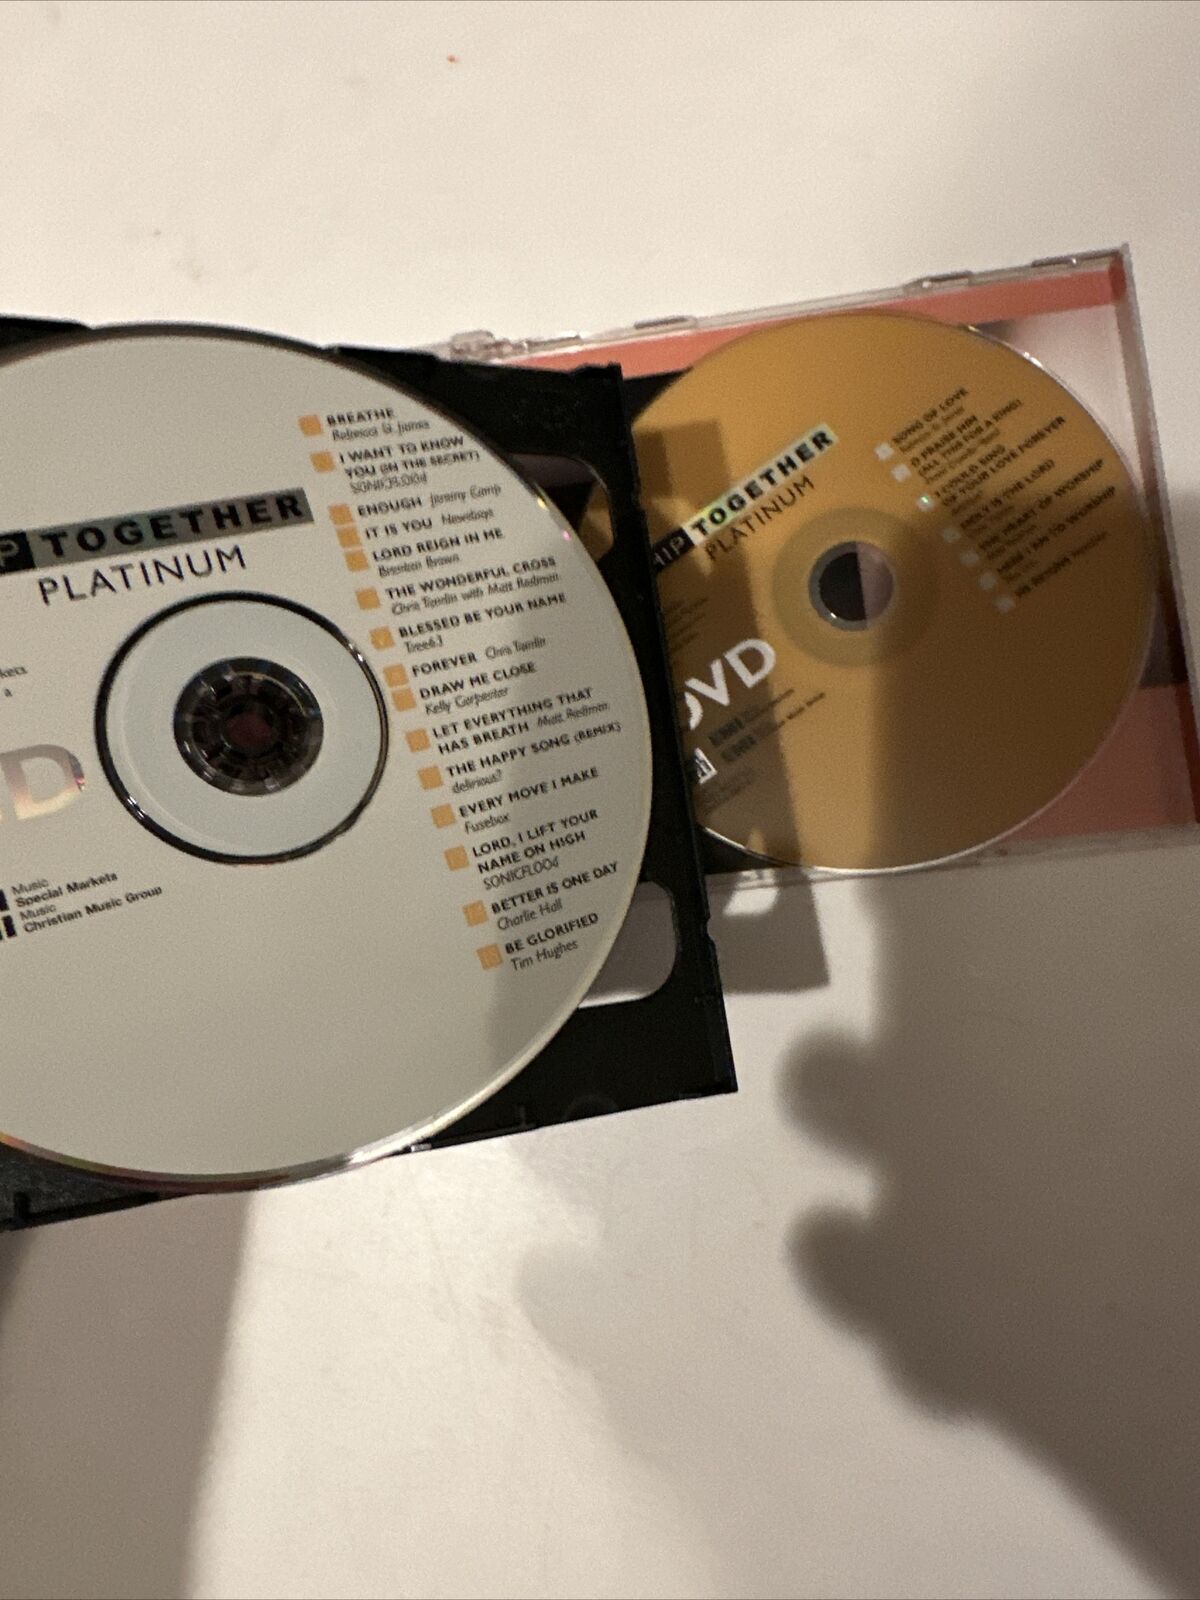 Worship Together CD DVD Platinum